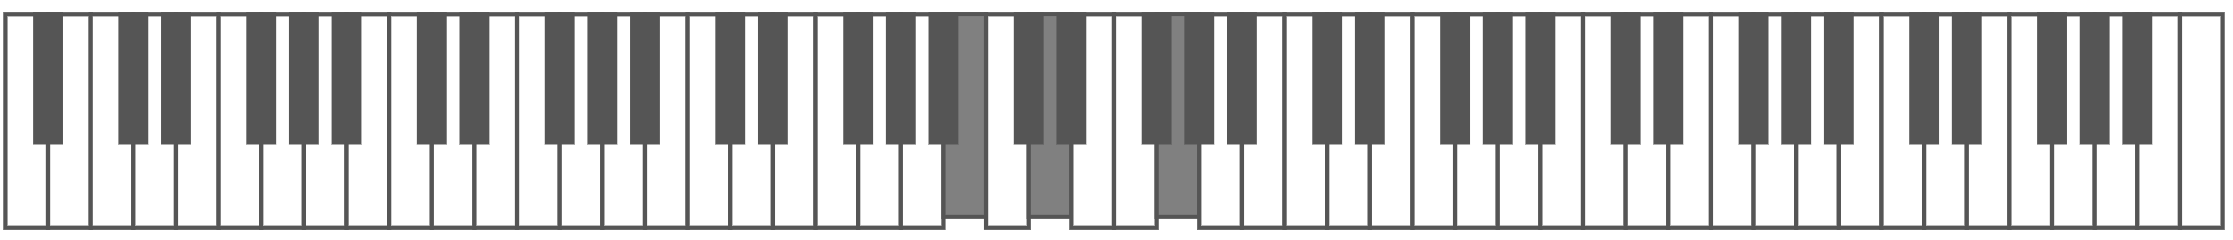 image of piano keys